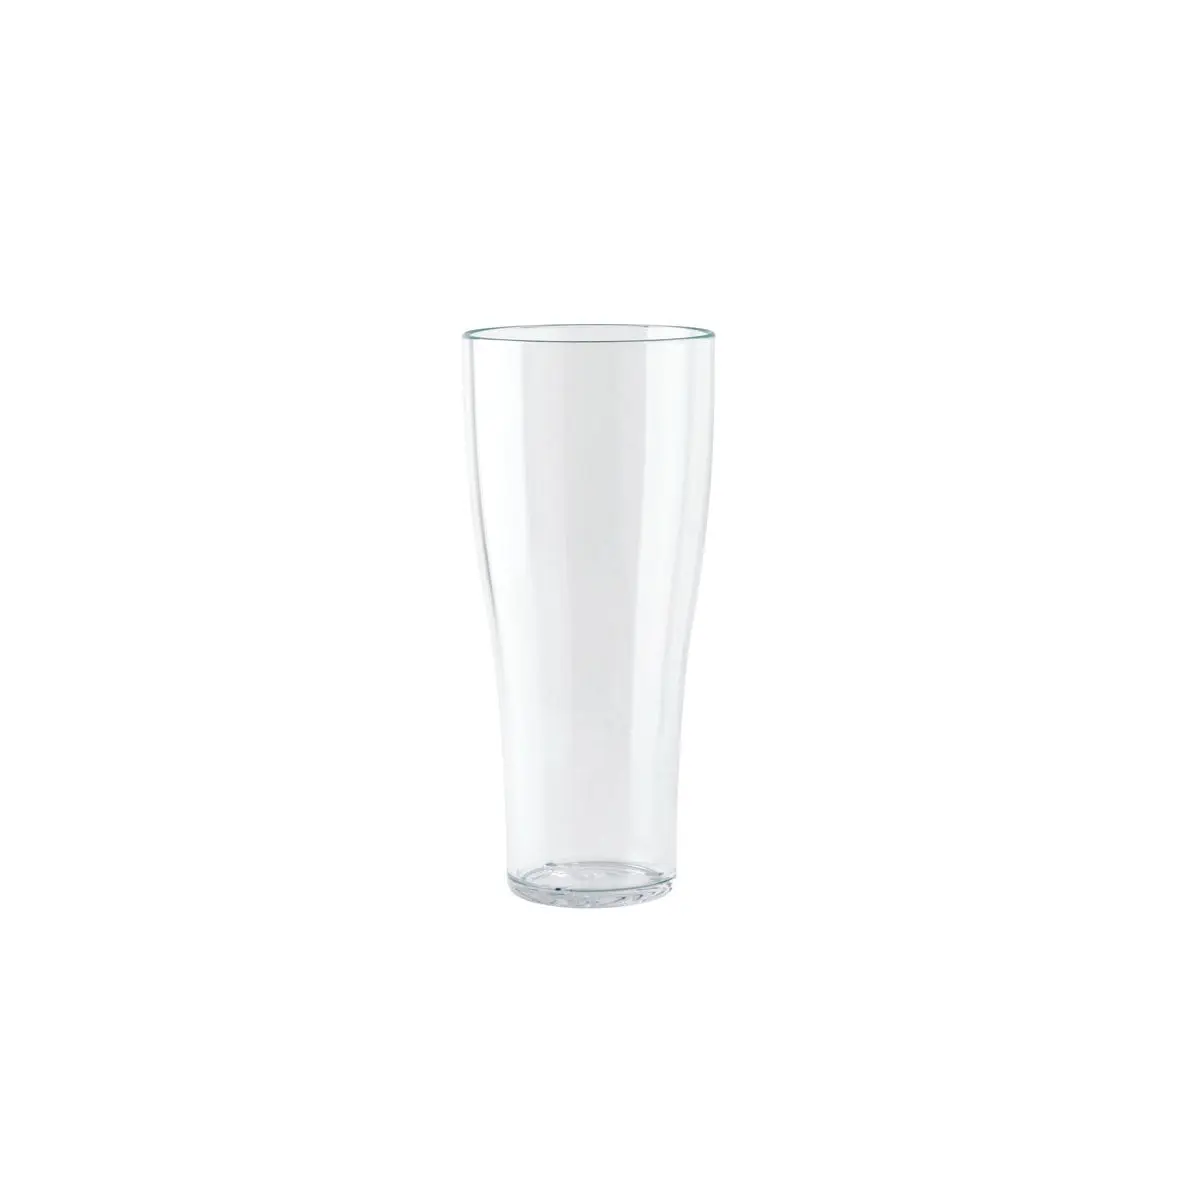 Kvalitný pohár Waca - Weibierglas 500 ml